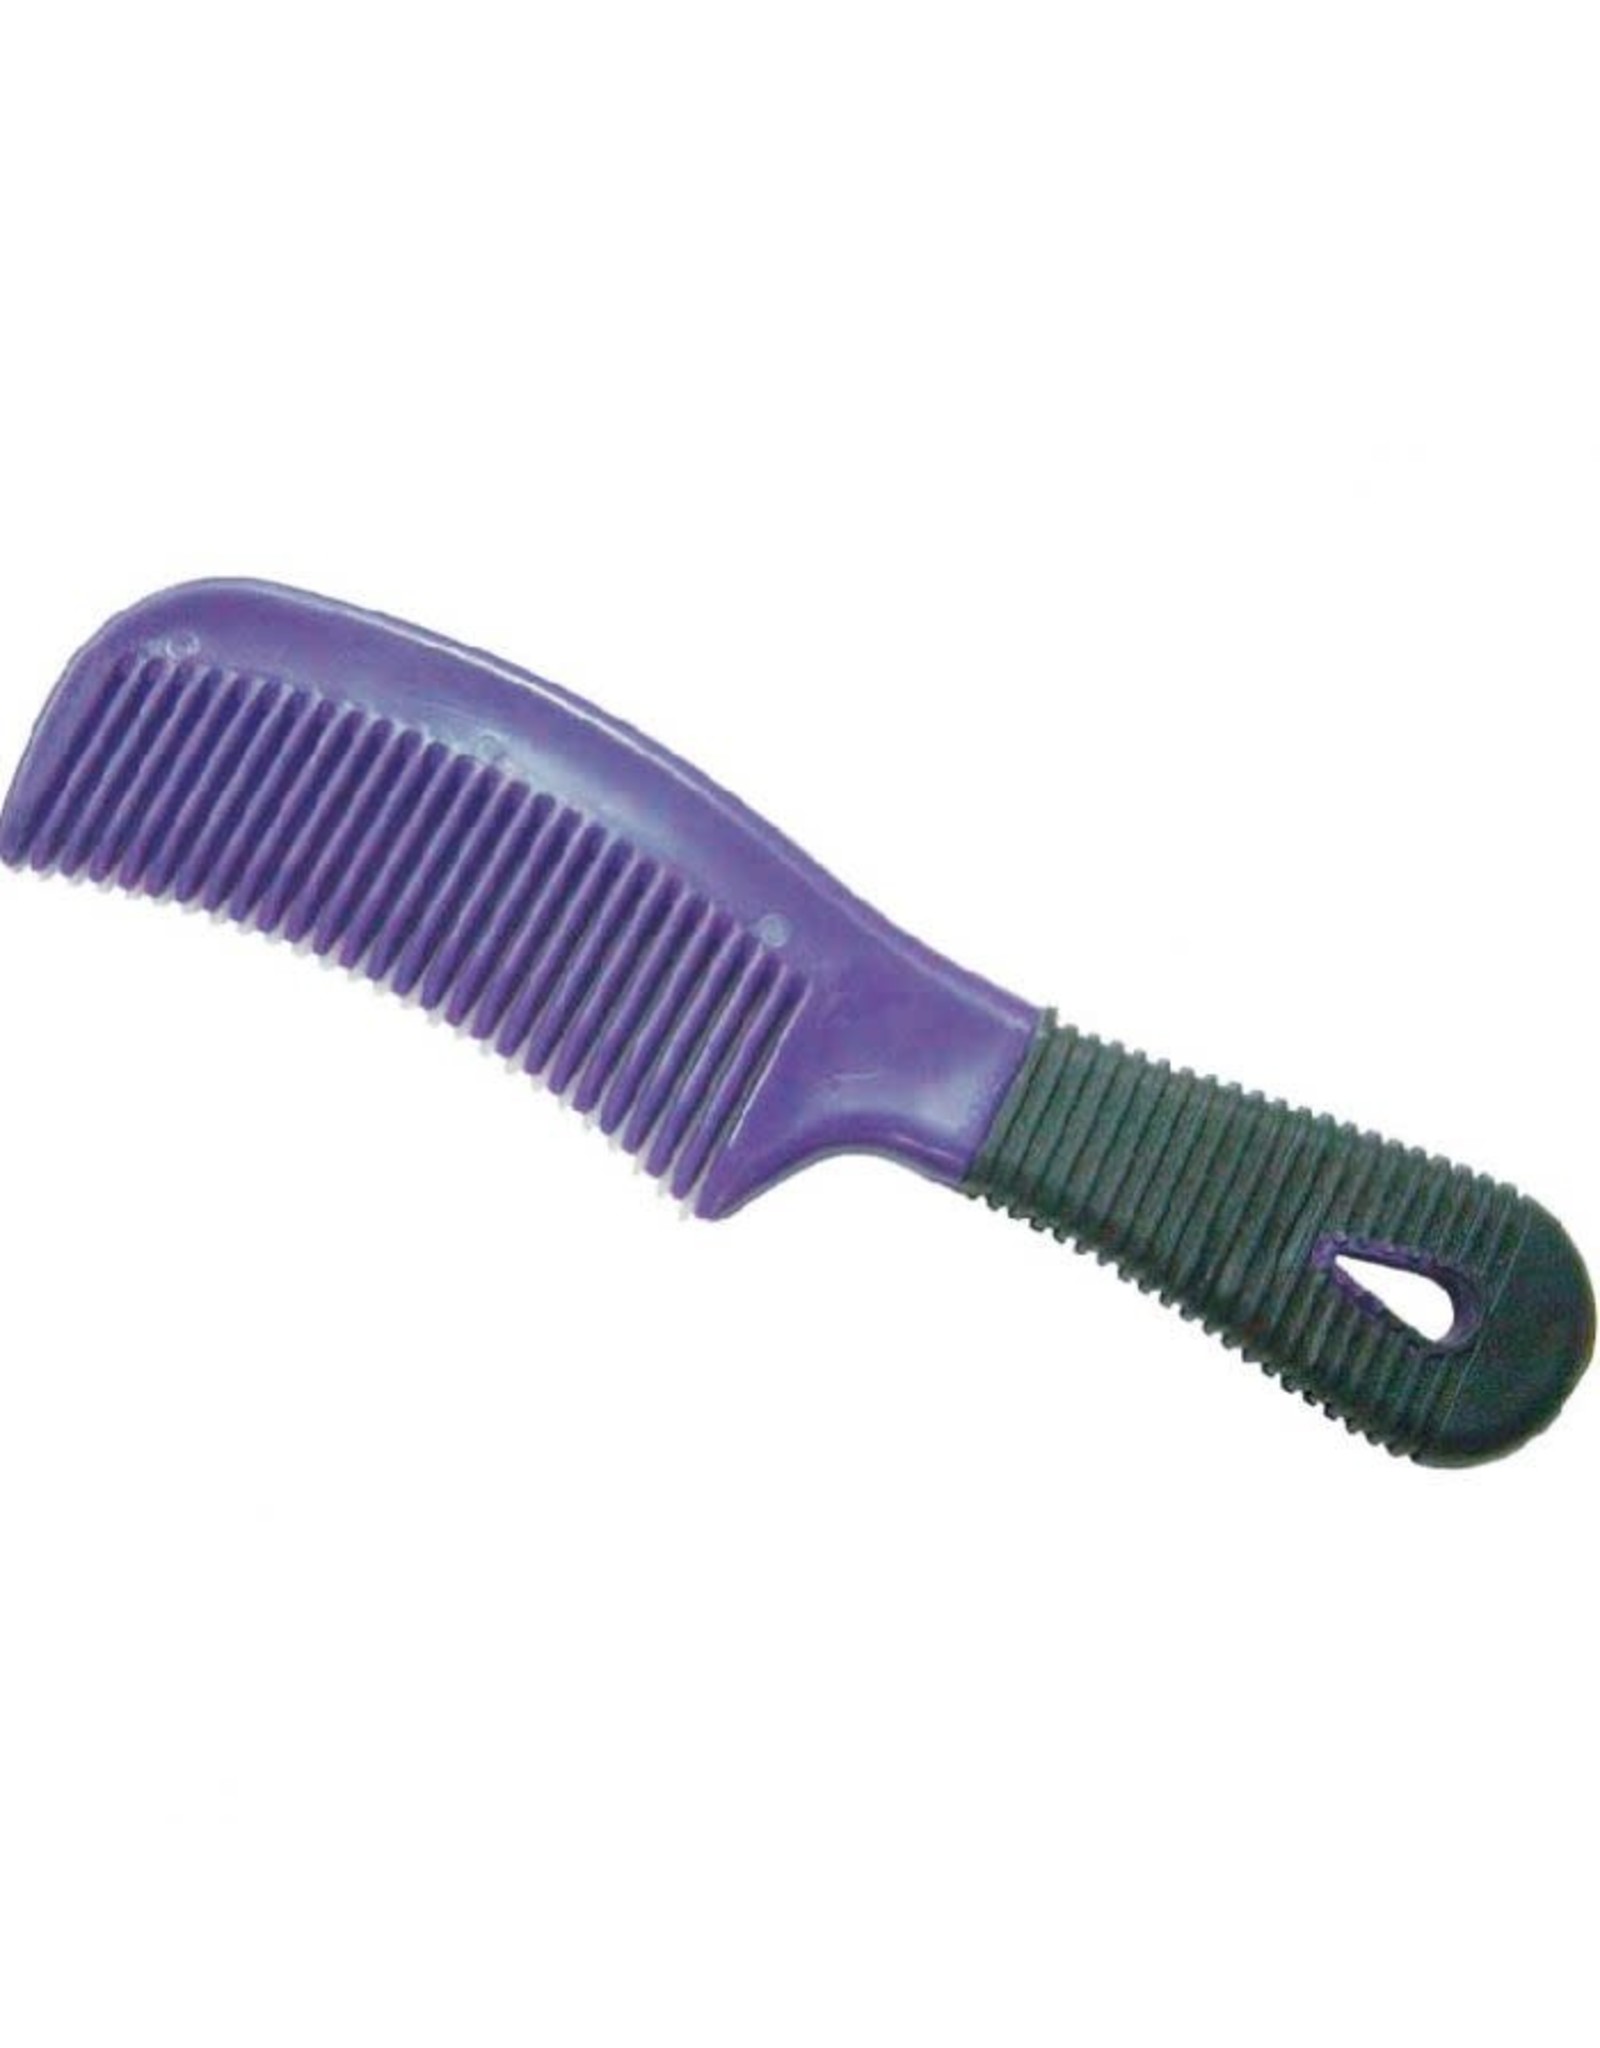 Ger-Ryan Plastic Comb w/ Rubber Handle